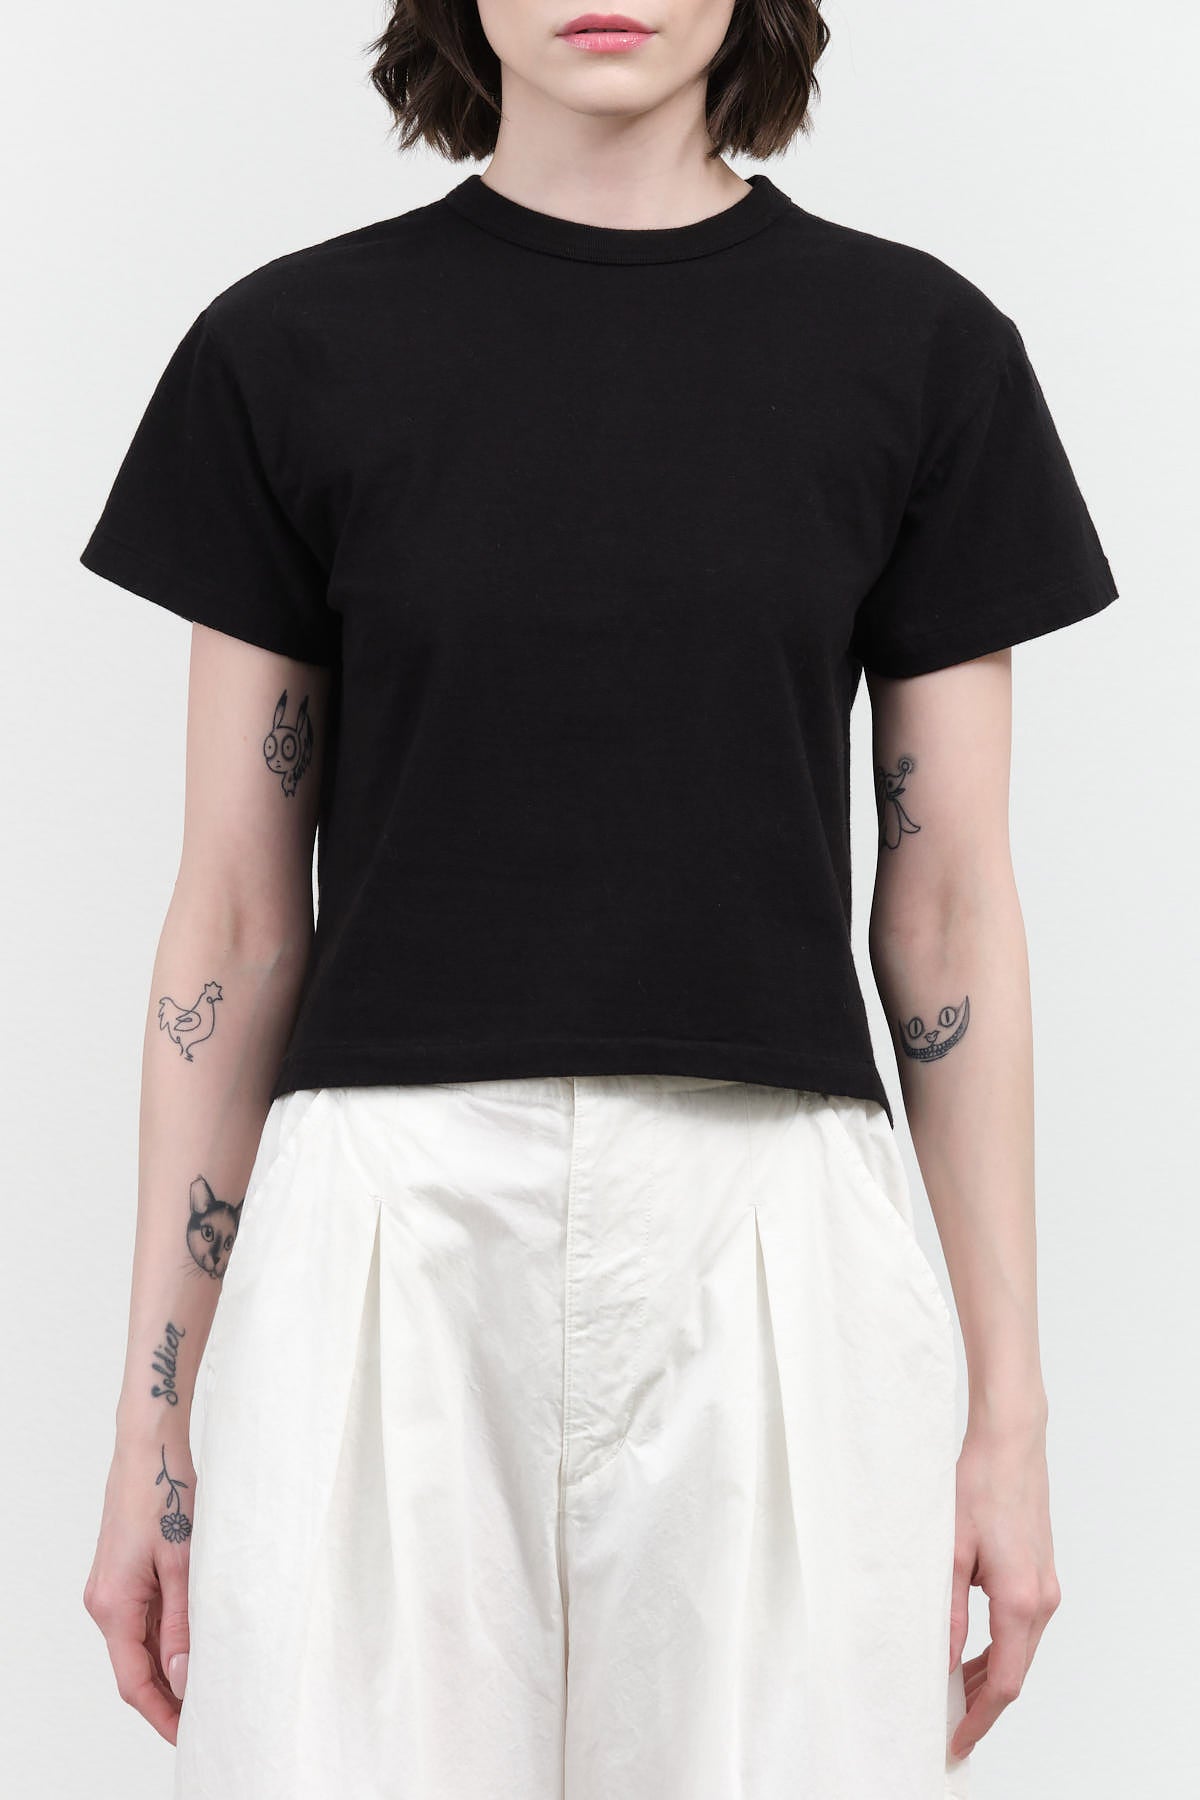 Hi'aka T-Shirt by Sunray Sportswear in Anthracite